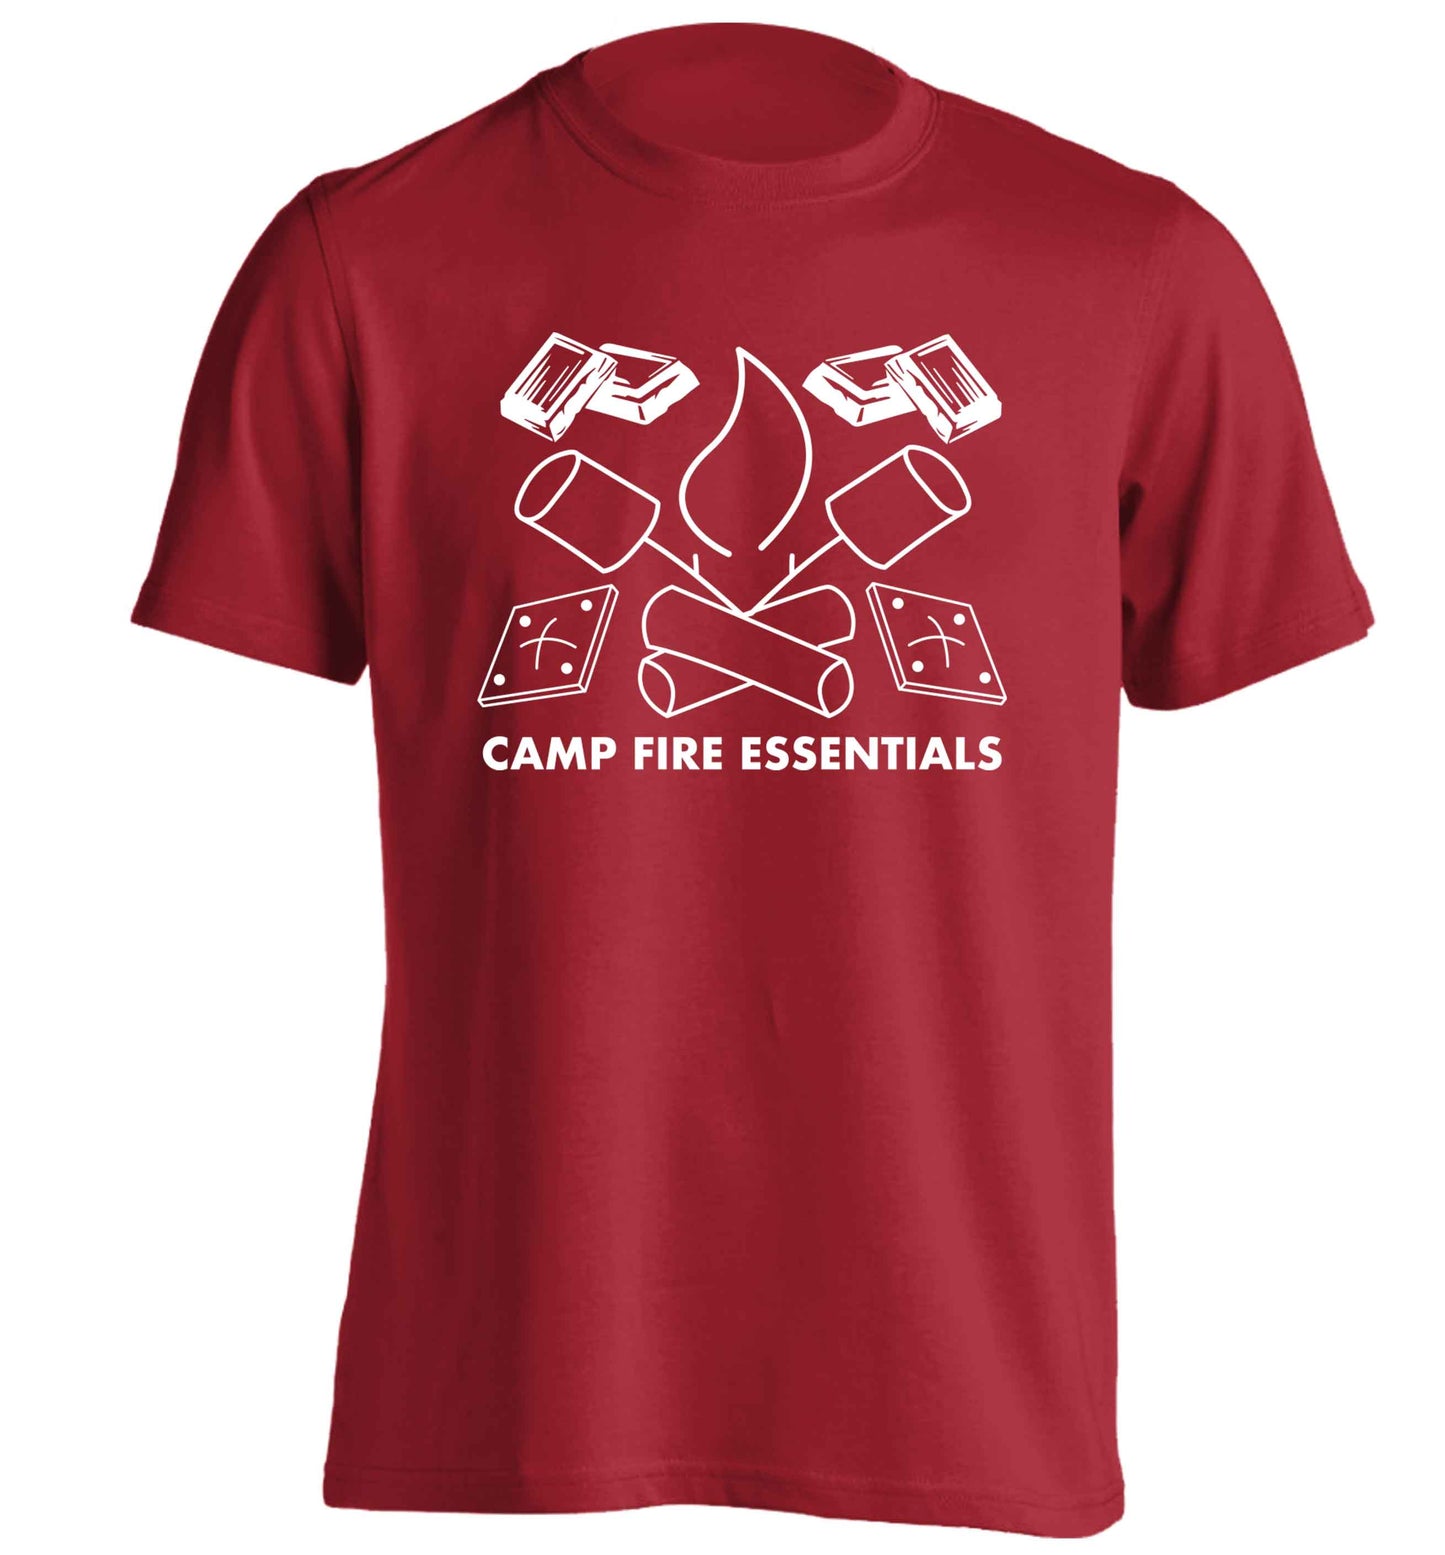 Campfire essentials adults unisex red Tshirt 2XL